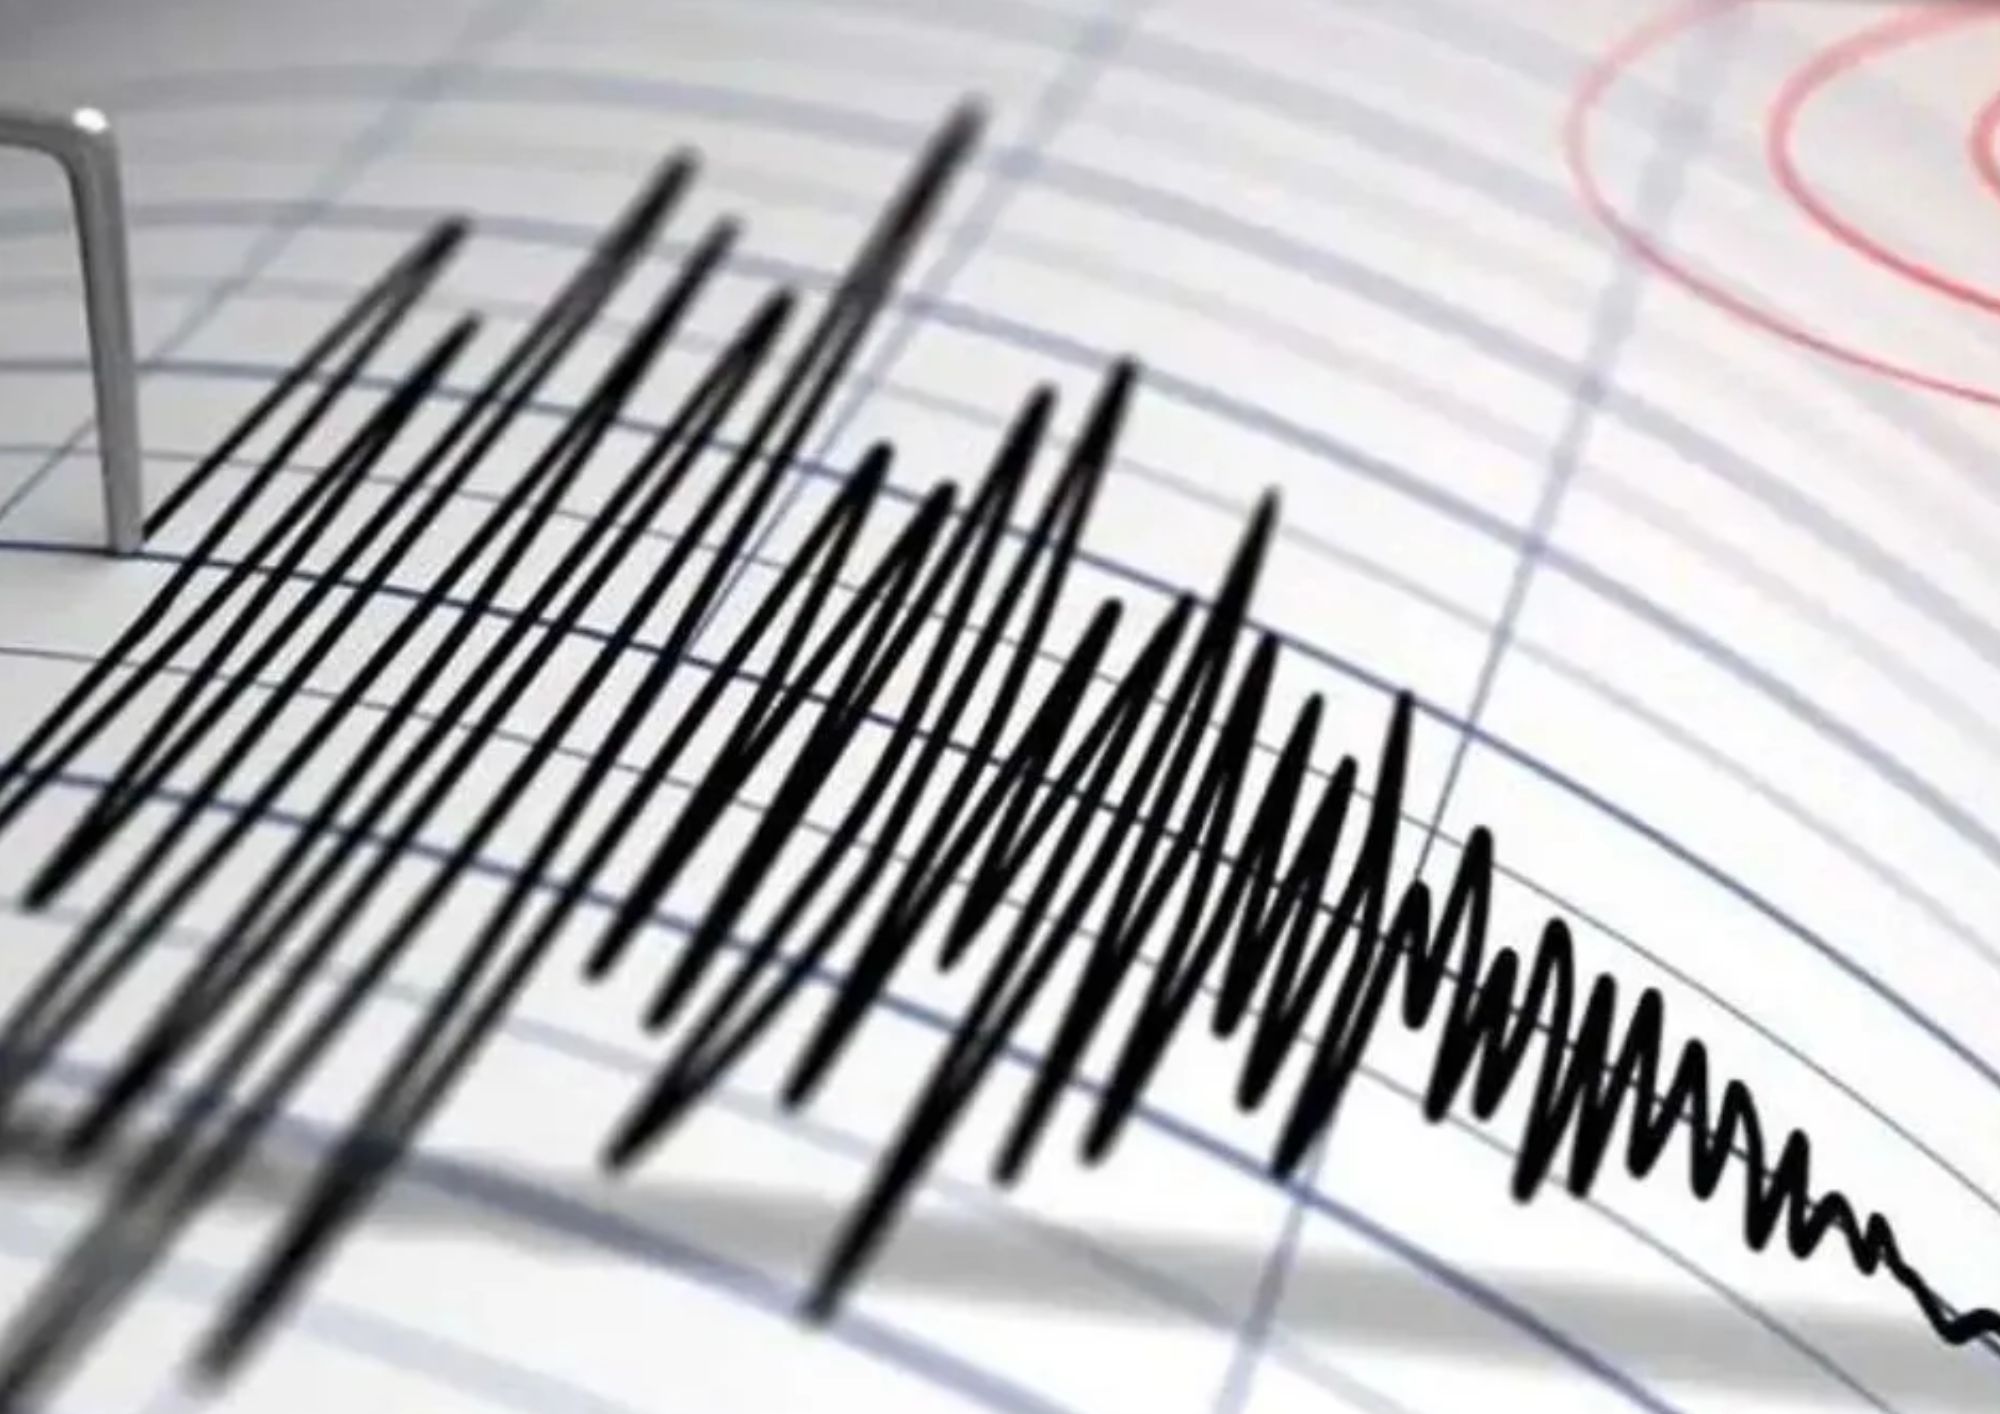 Earthquake in Rajasthan - Rajasthan shaken by earthquake tremors